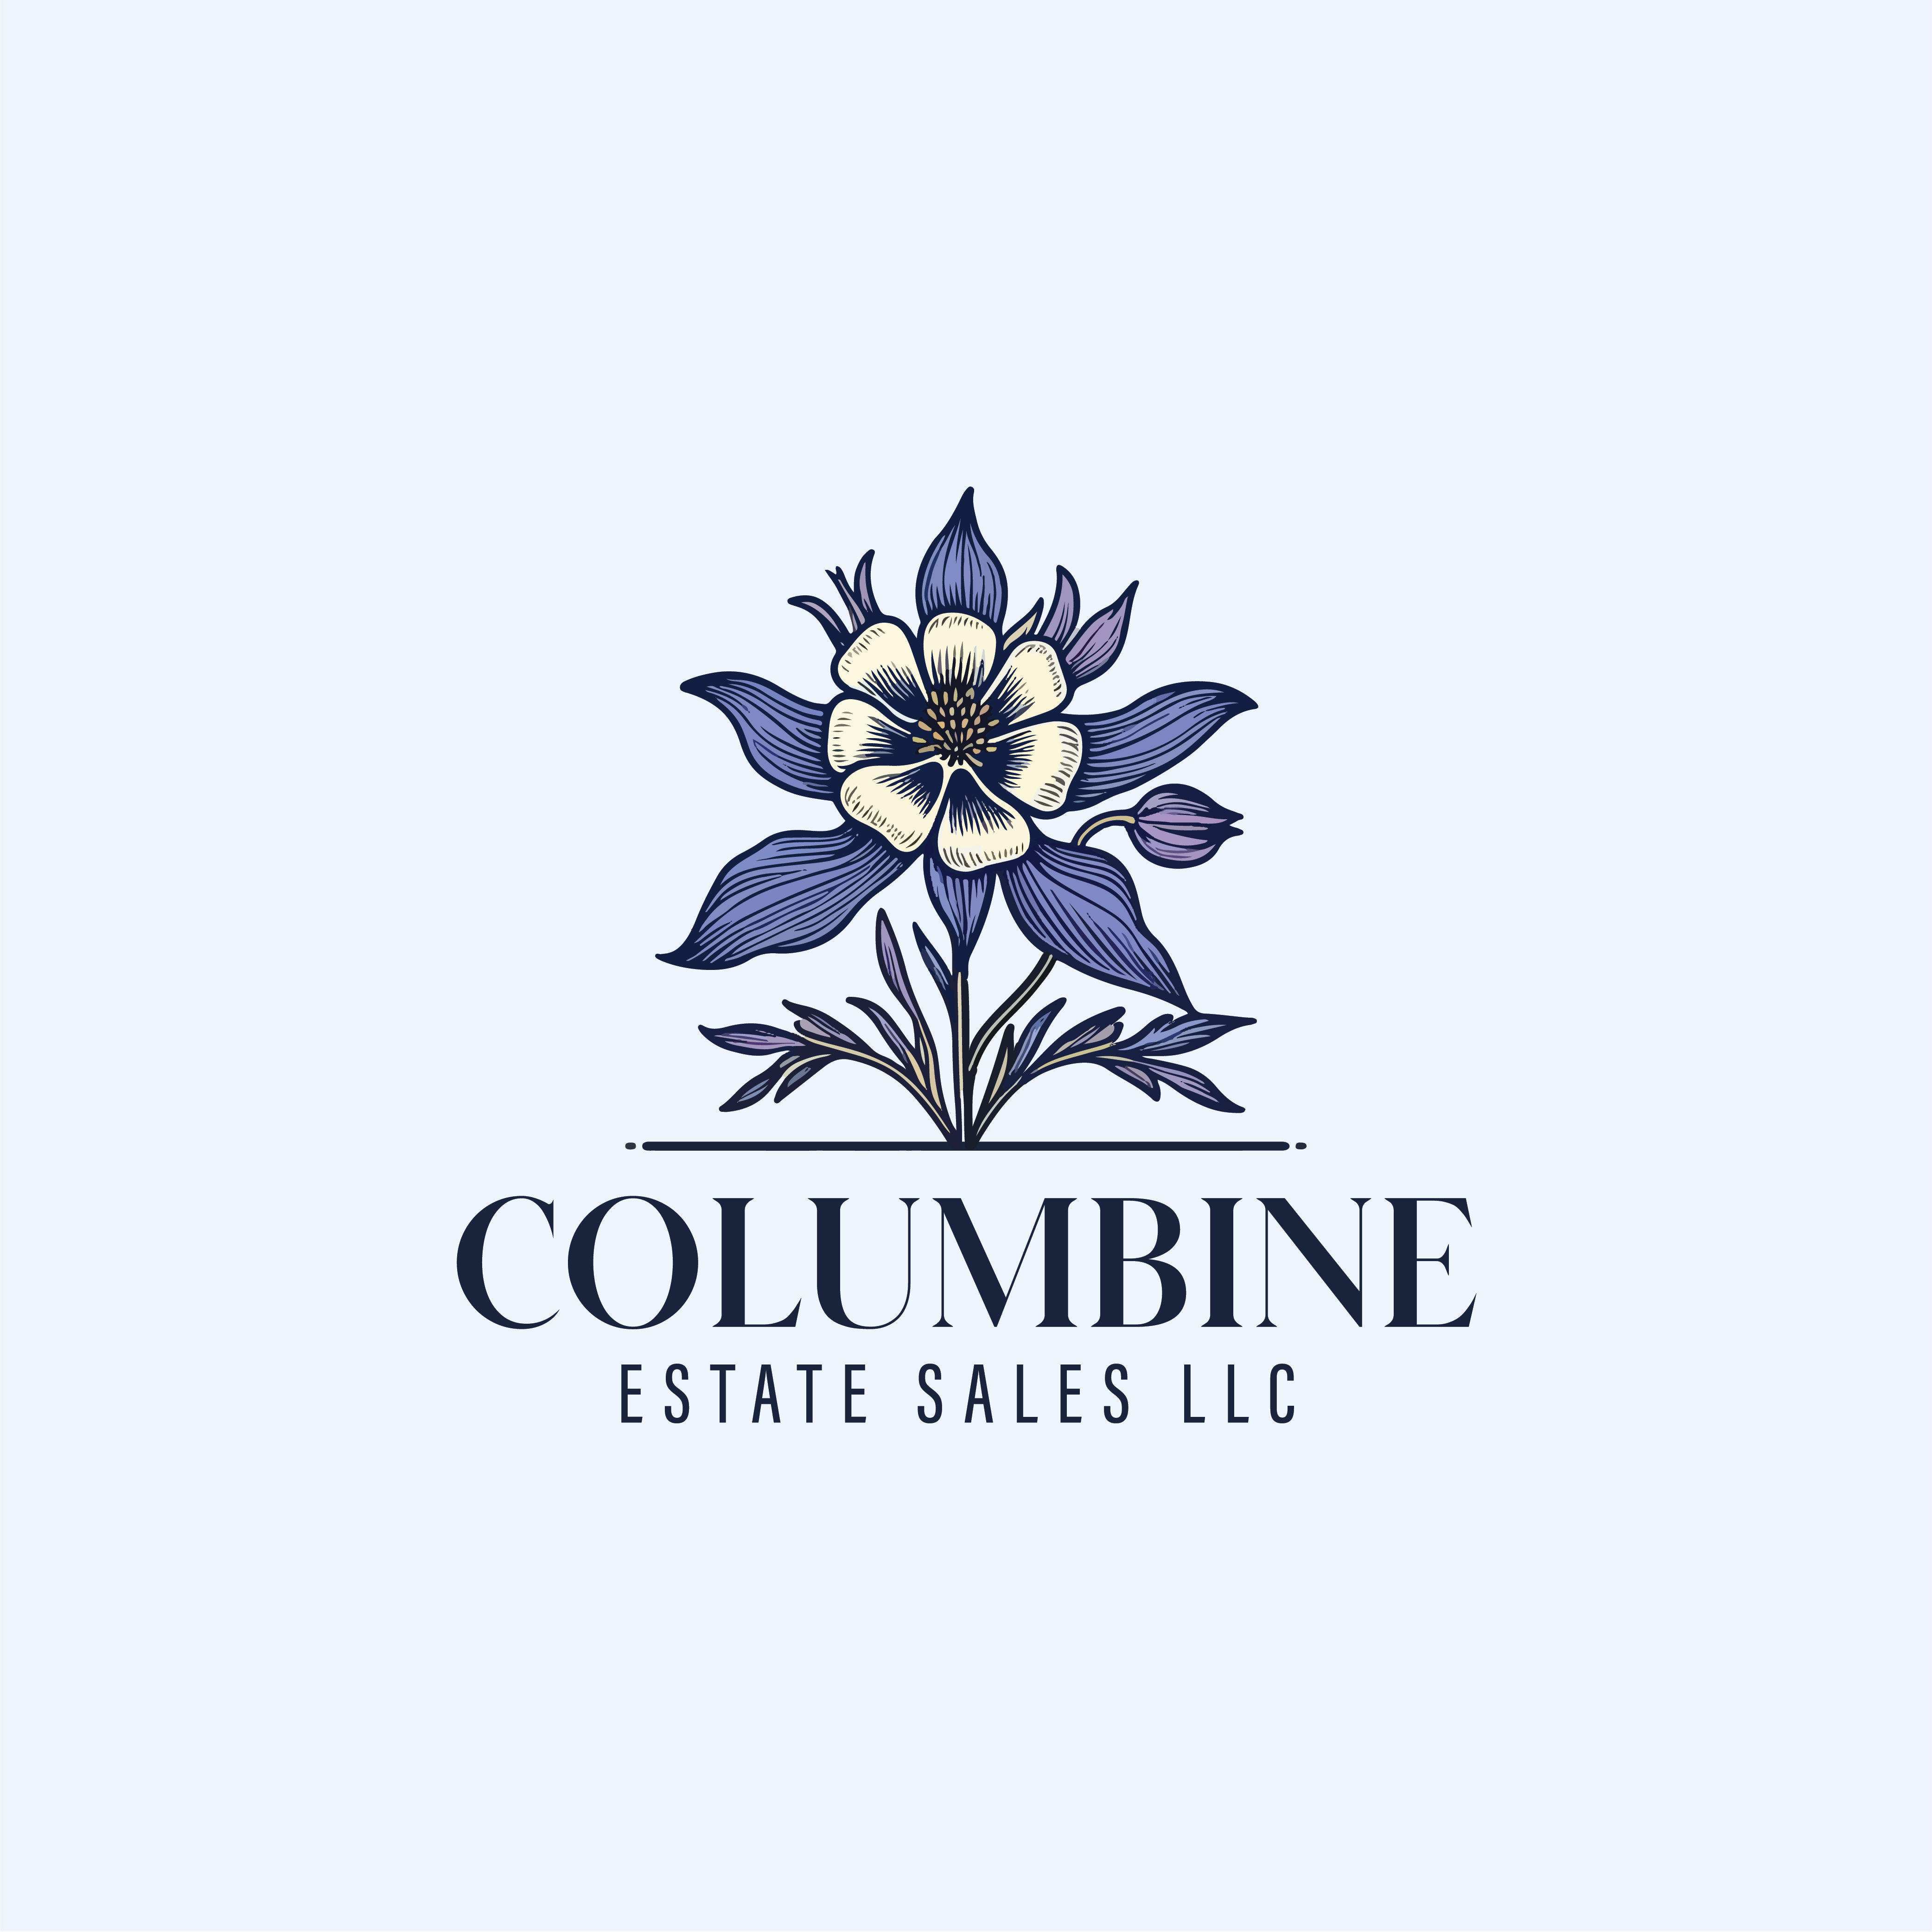 Columbine Estate Sales LLC | AuctionNinja